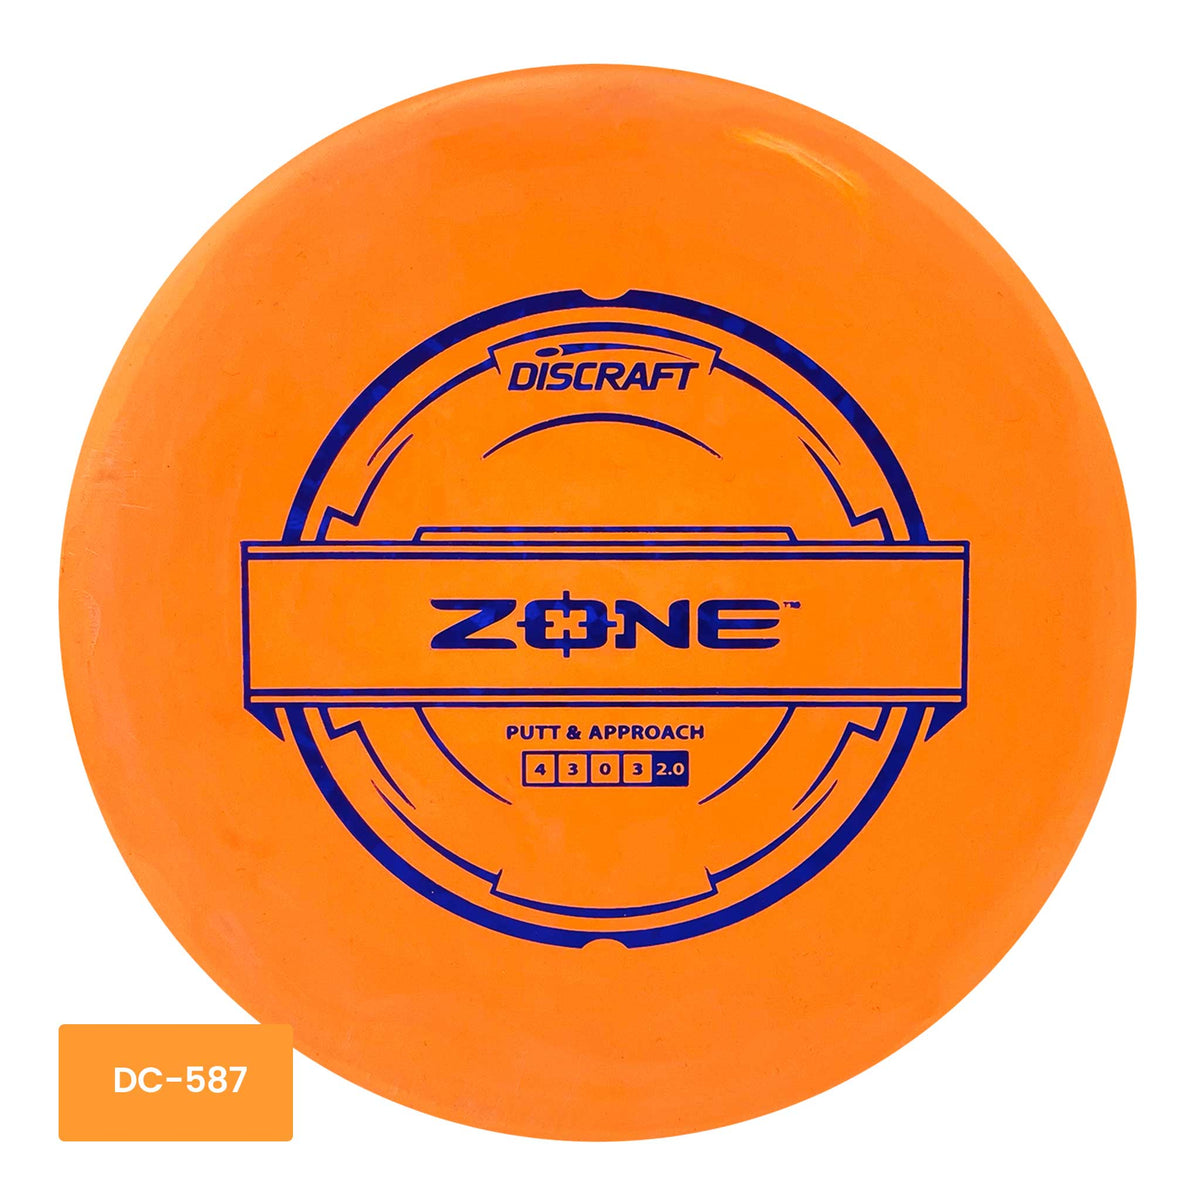 Discraft Putter Line Zone putter and approach - Orange